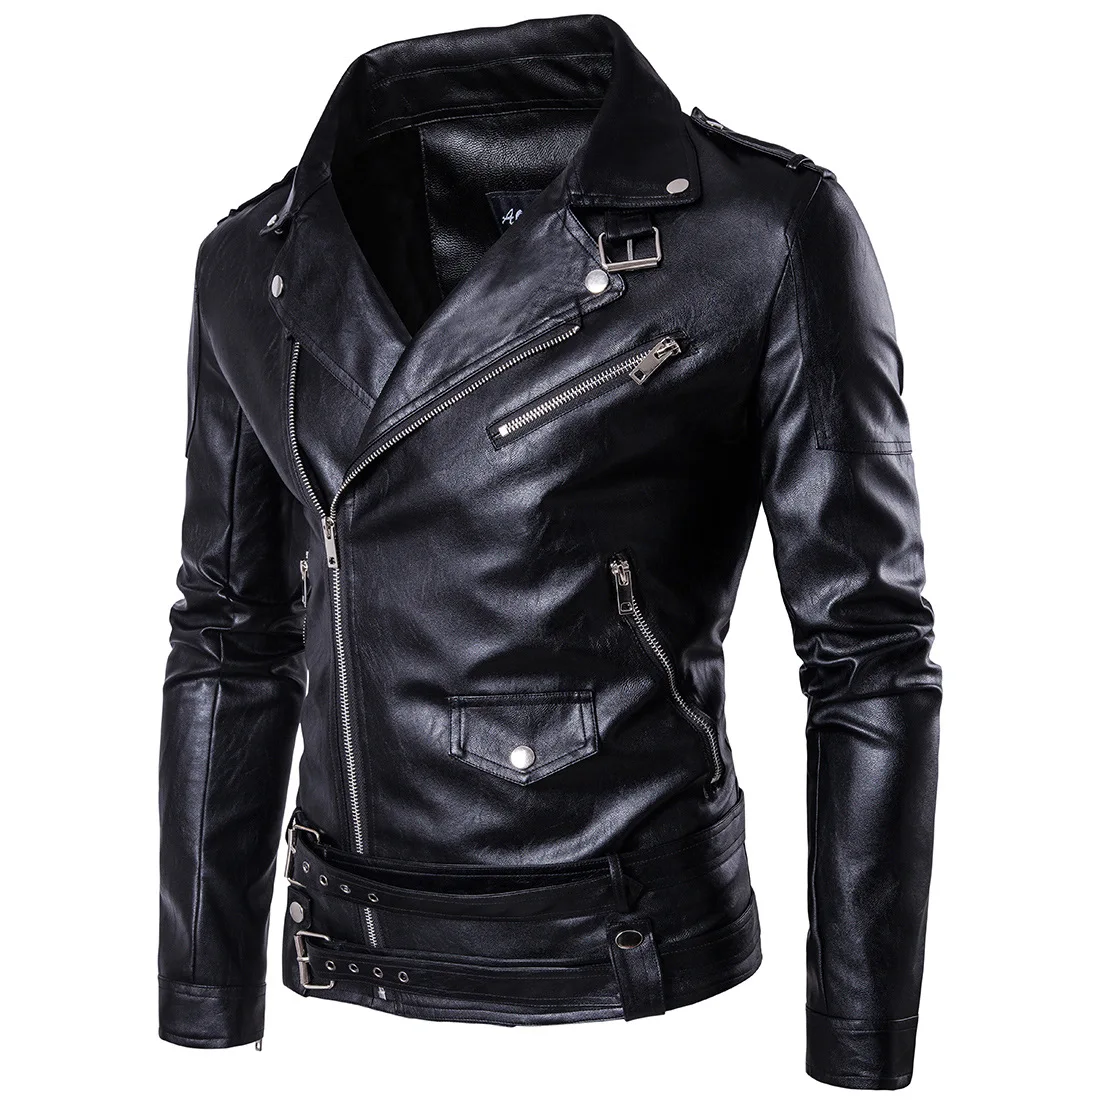 

2020 Men Jackets Casual Leather Motorcycle Vintage Rock & Roll Jacket Coat Autumn Design Biker Rivet Pockets PU Leather Jackets, Pic